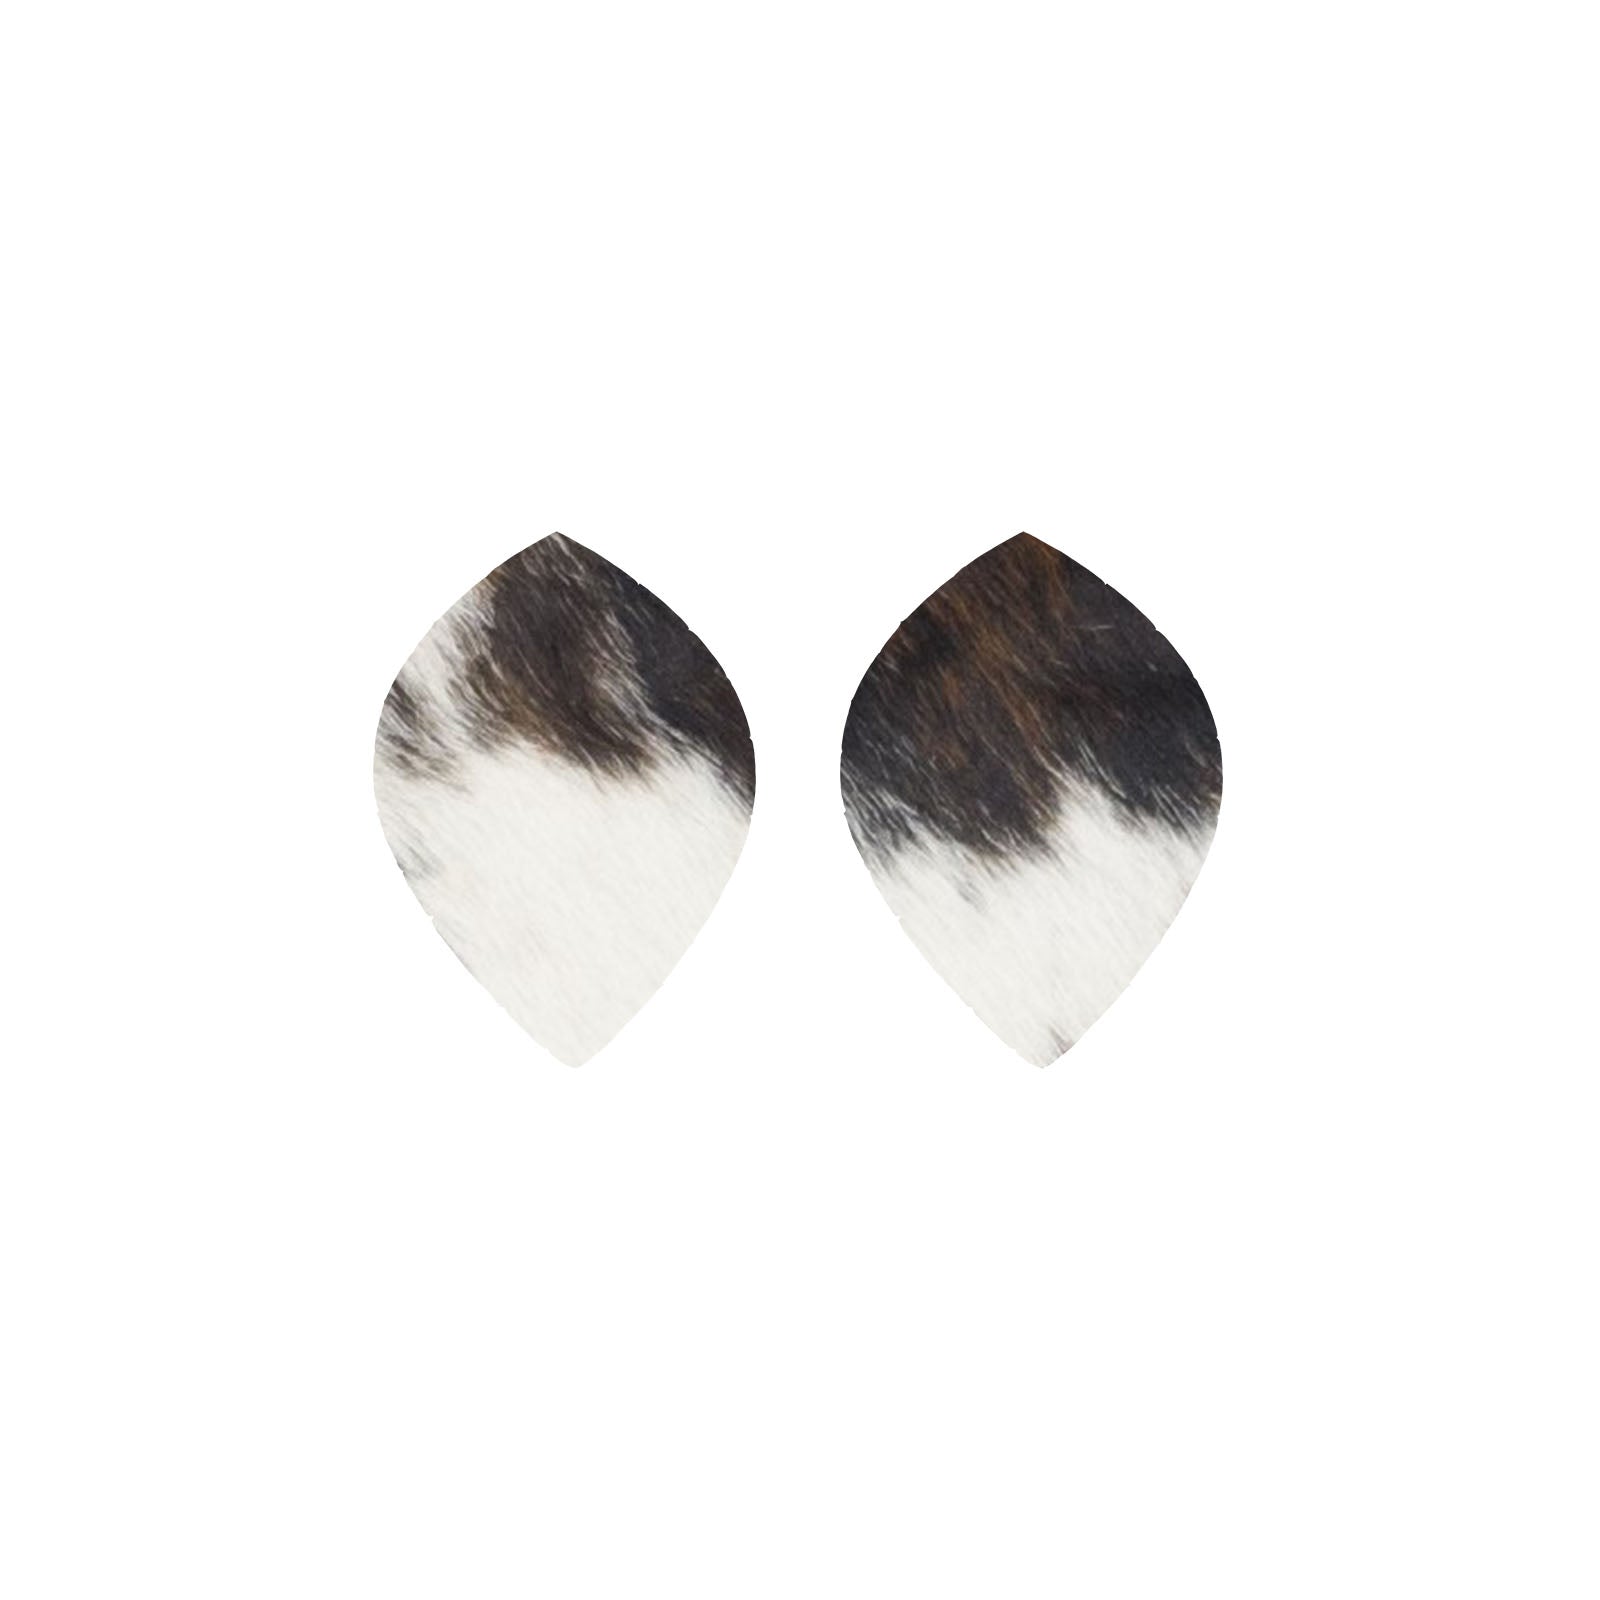 Tri-Colored Black/Brown/Off White Hair On Die Cut Earrings, Medium Leaf | The Leather Guy